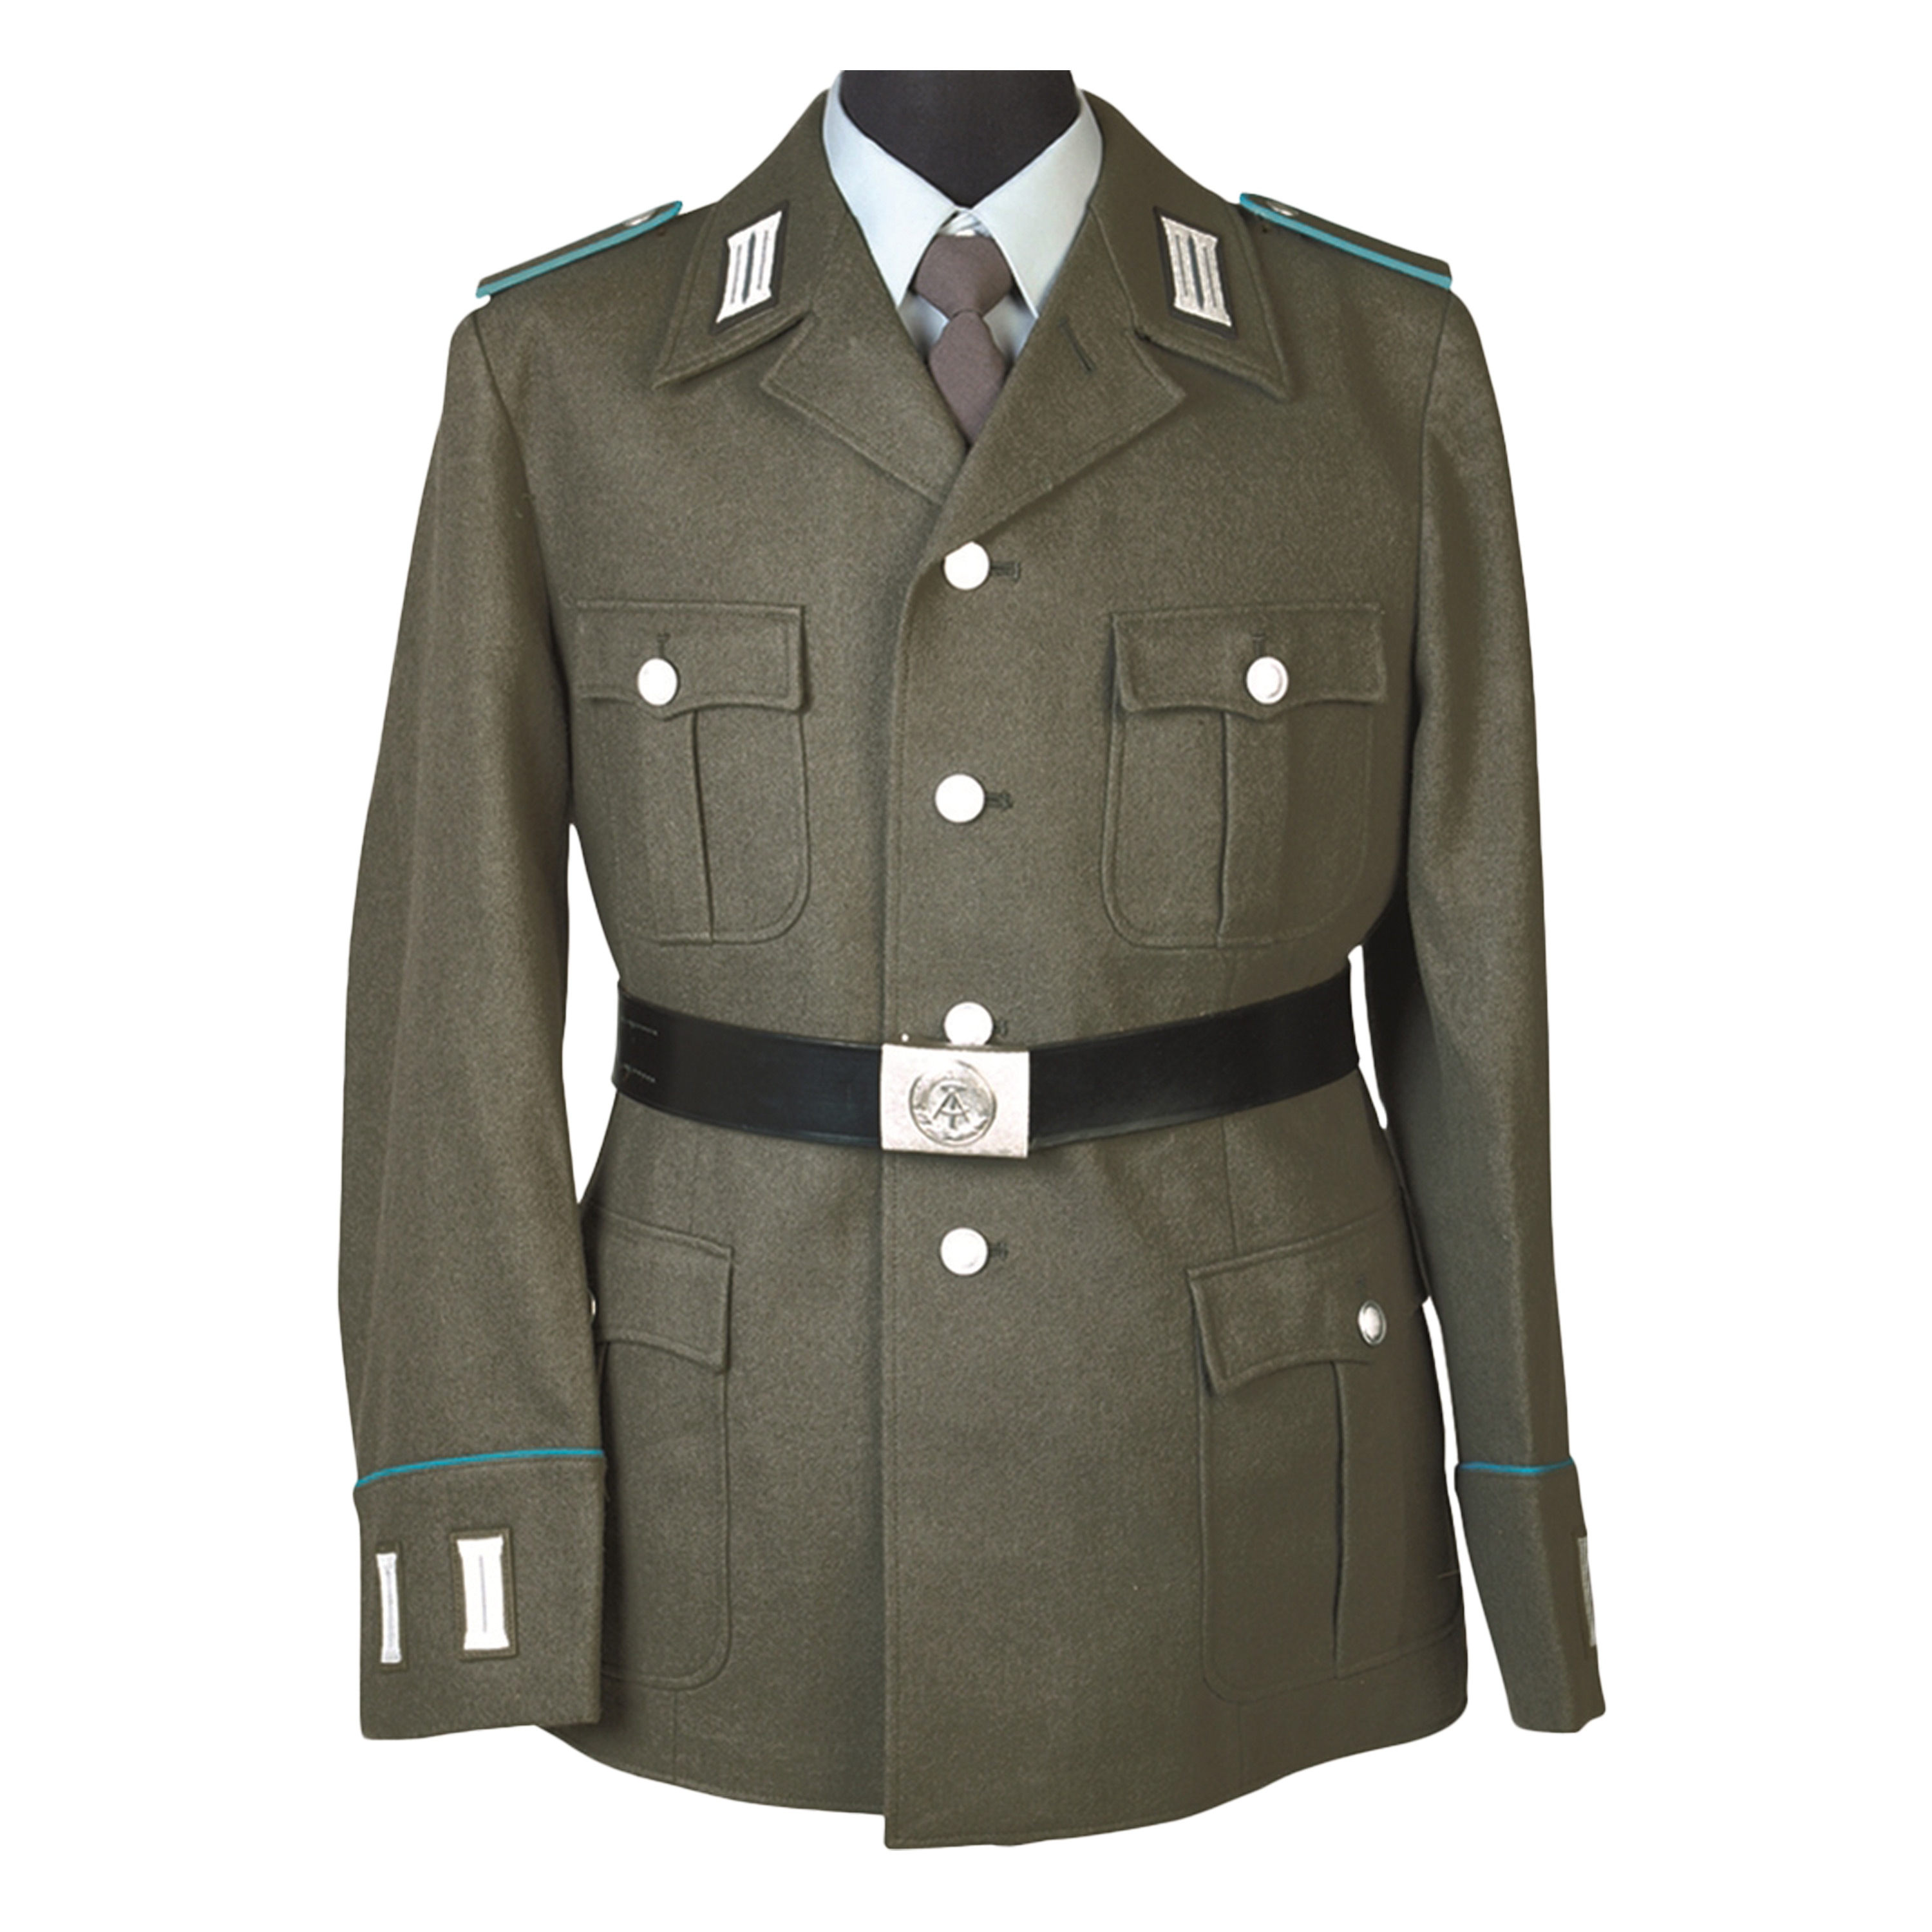 East German Lsk Soldiers Uniform Jacket Like New East German Lsk